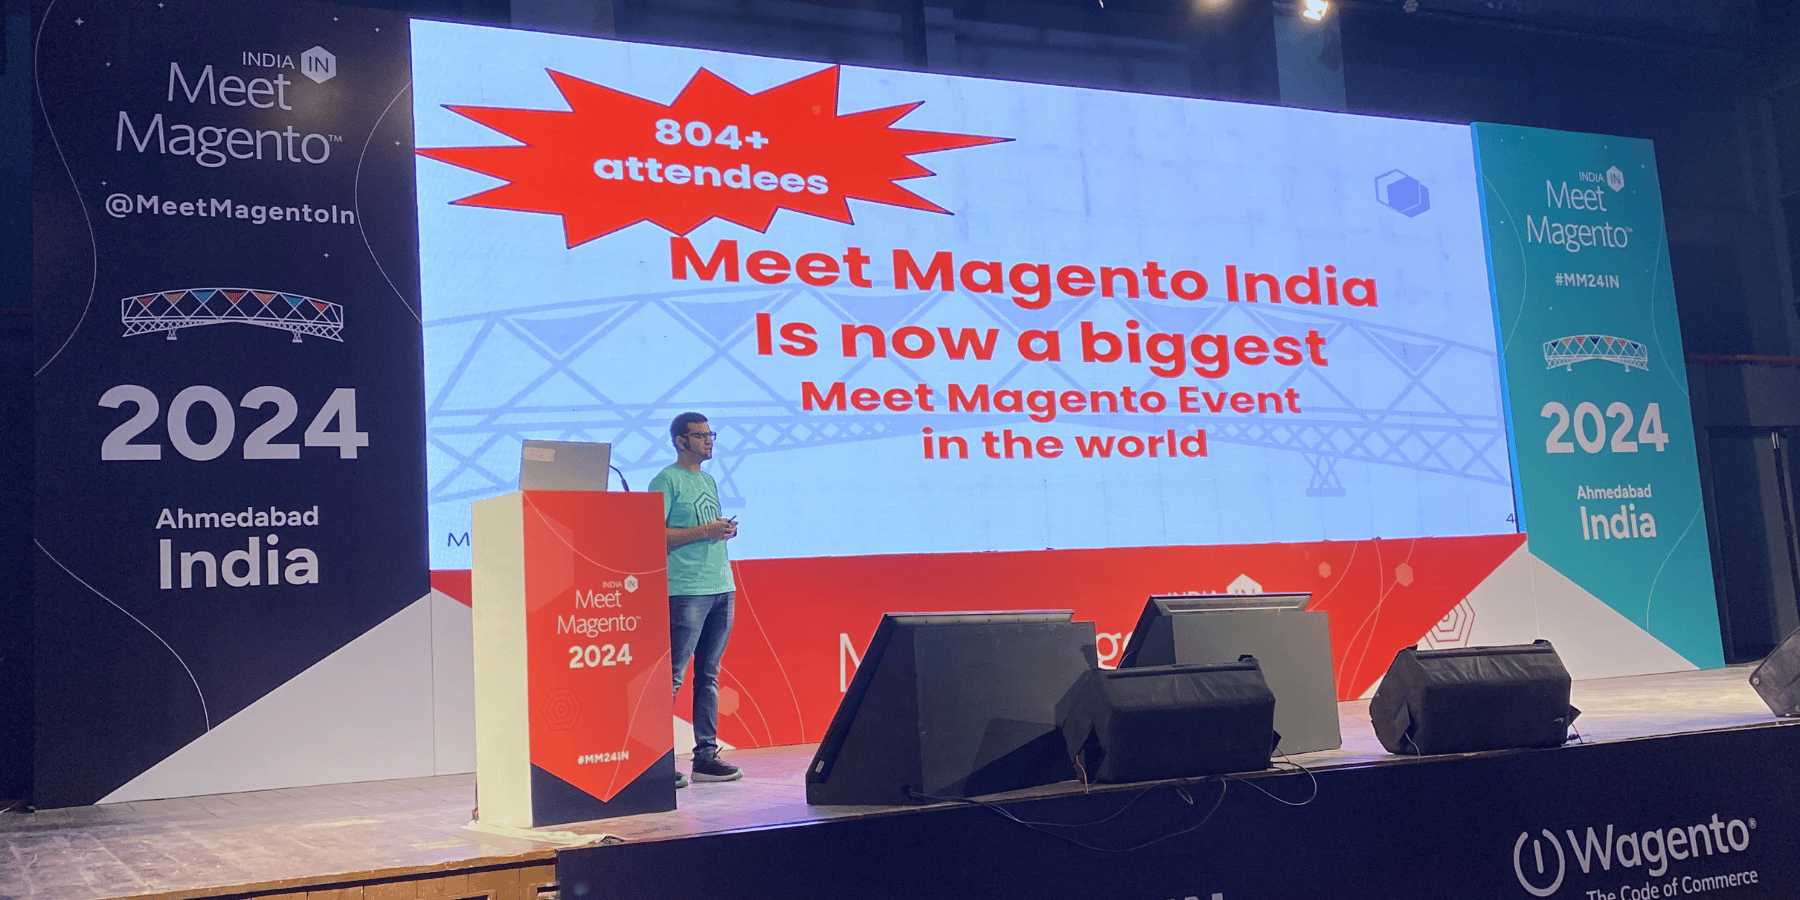 Recapping My Meet Magento India 2024 Experience